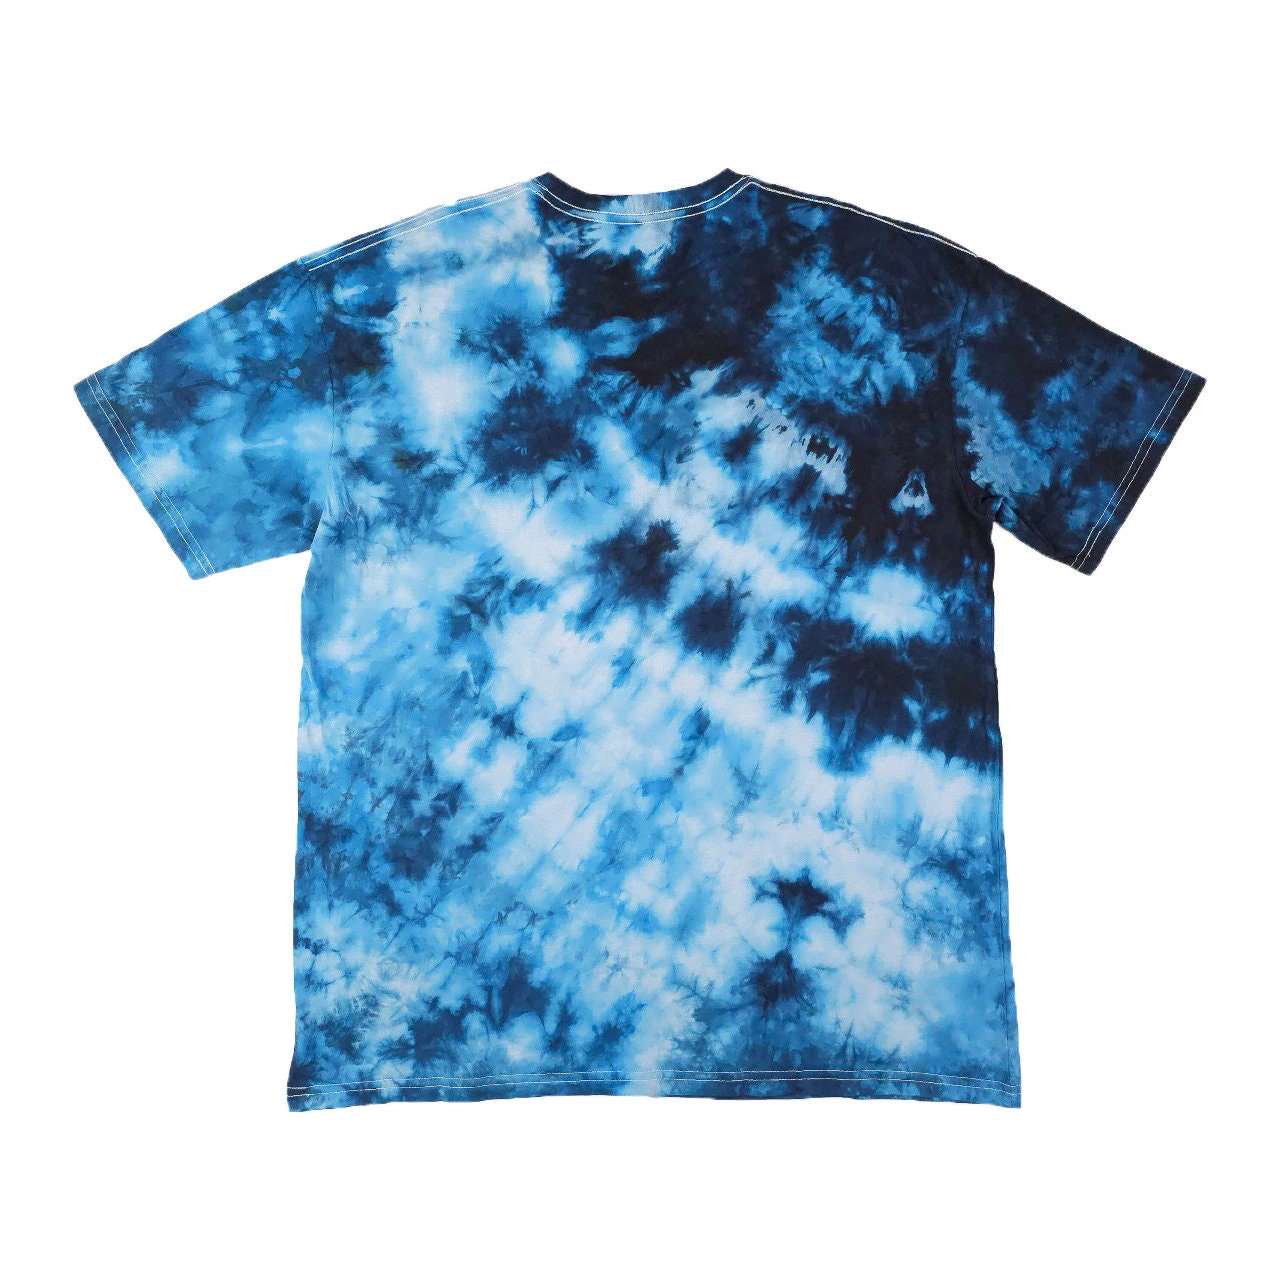 Blue Impact Cram Tie Dye T-Shirt